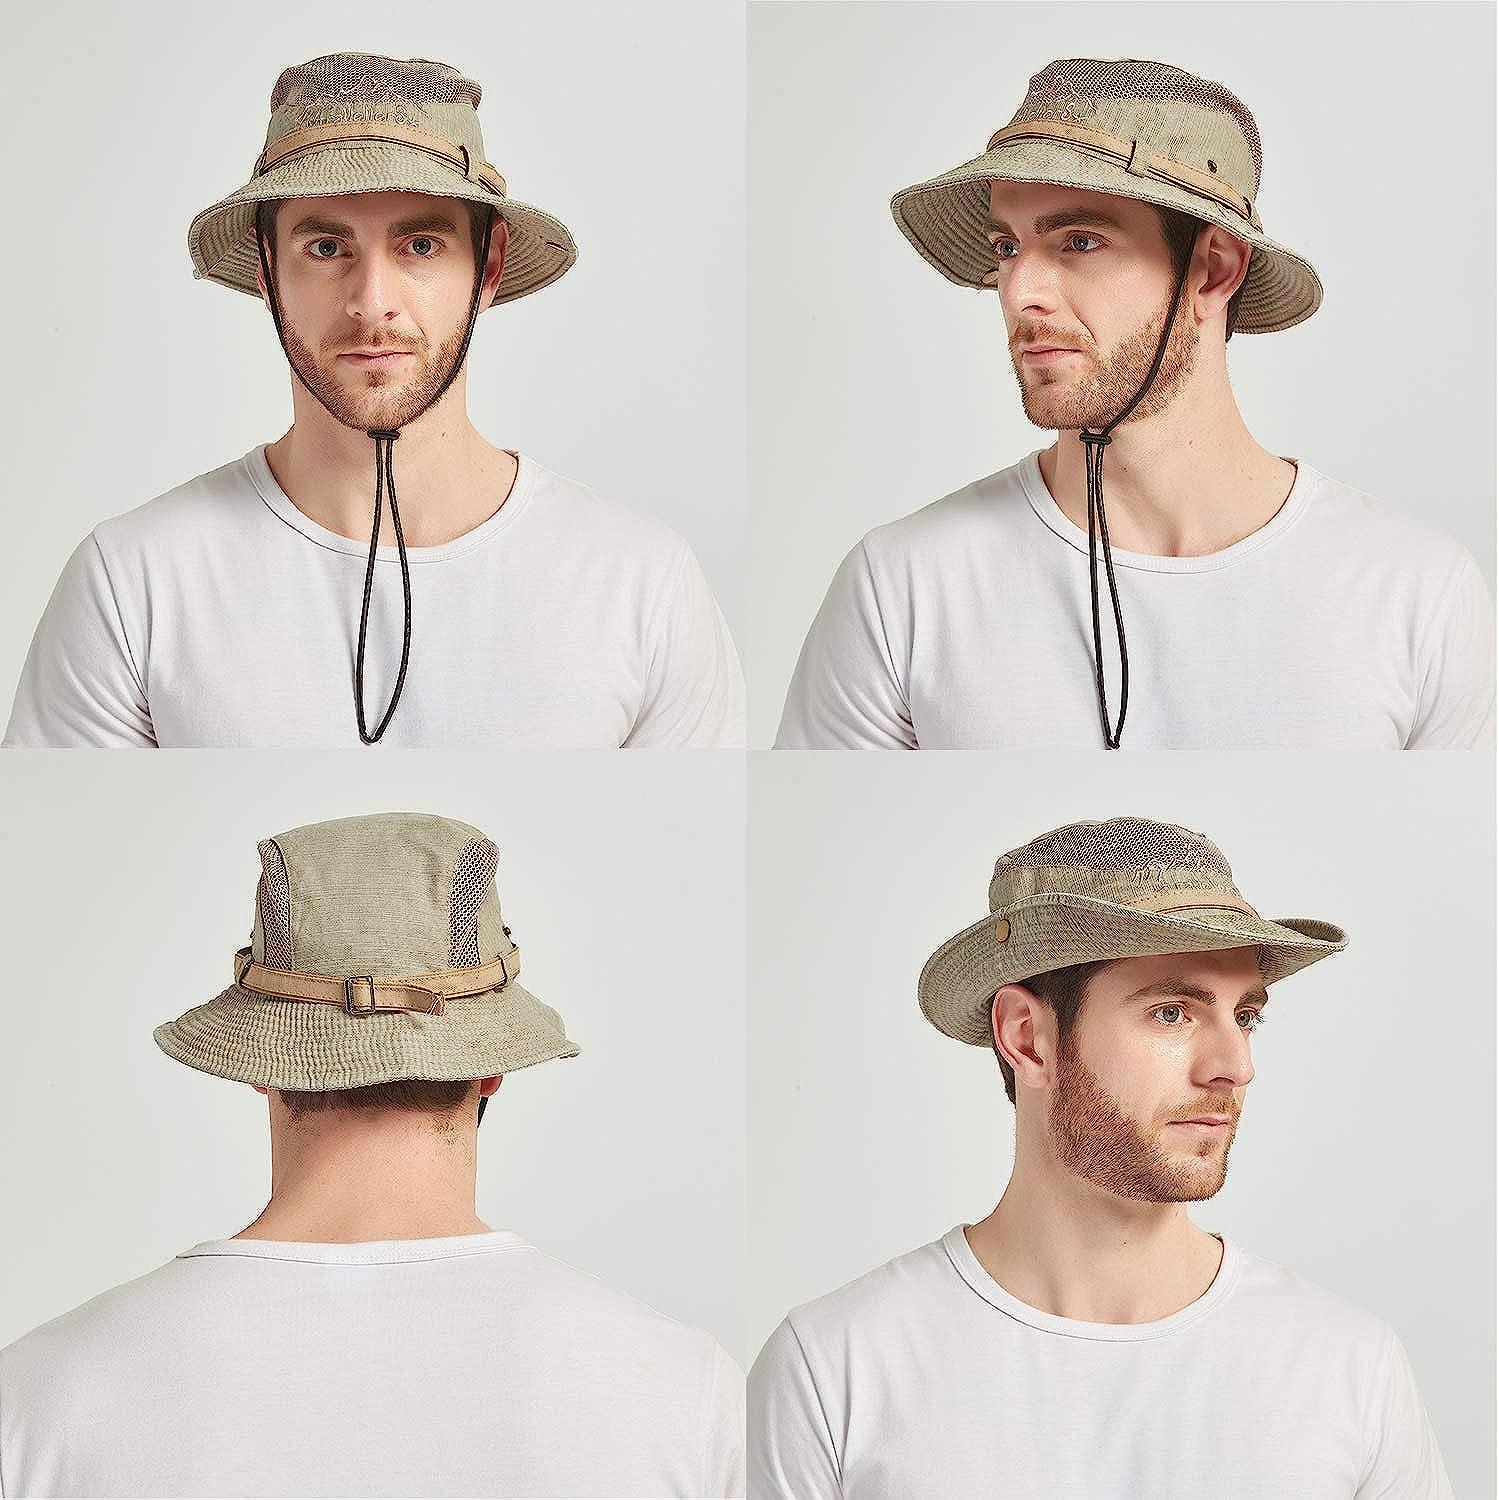 Mens UV Protection Foldable Sun Hat, Green